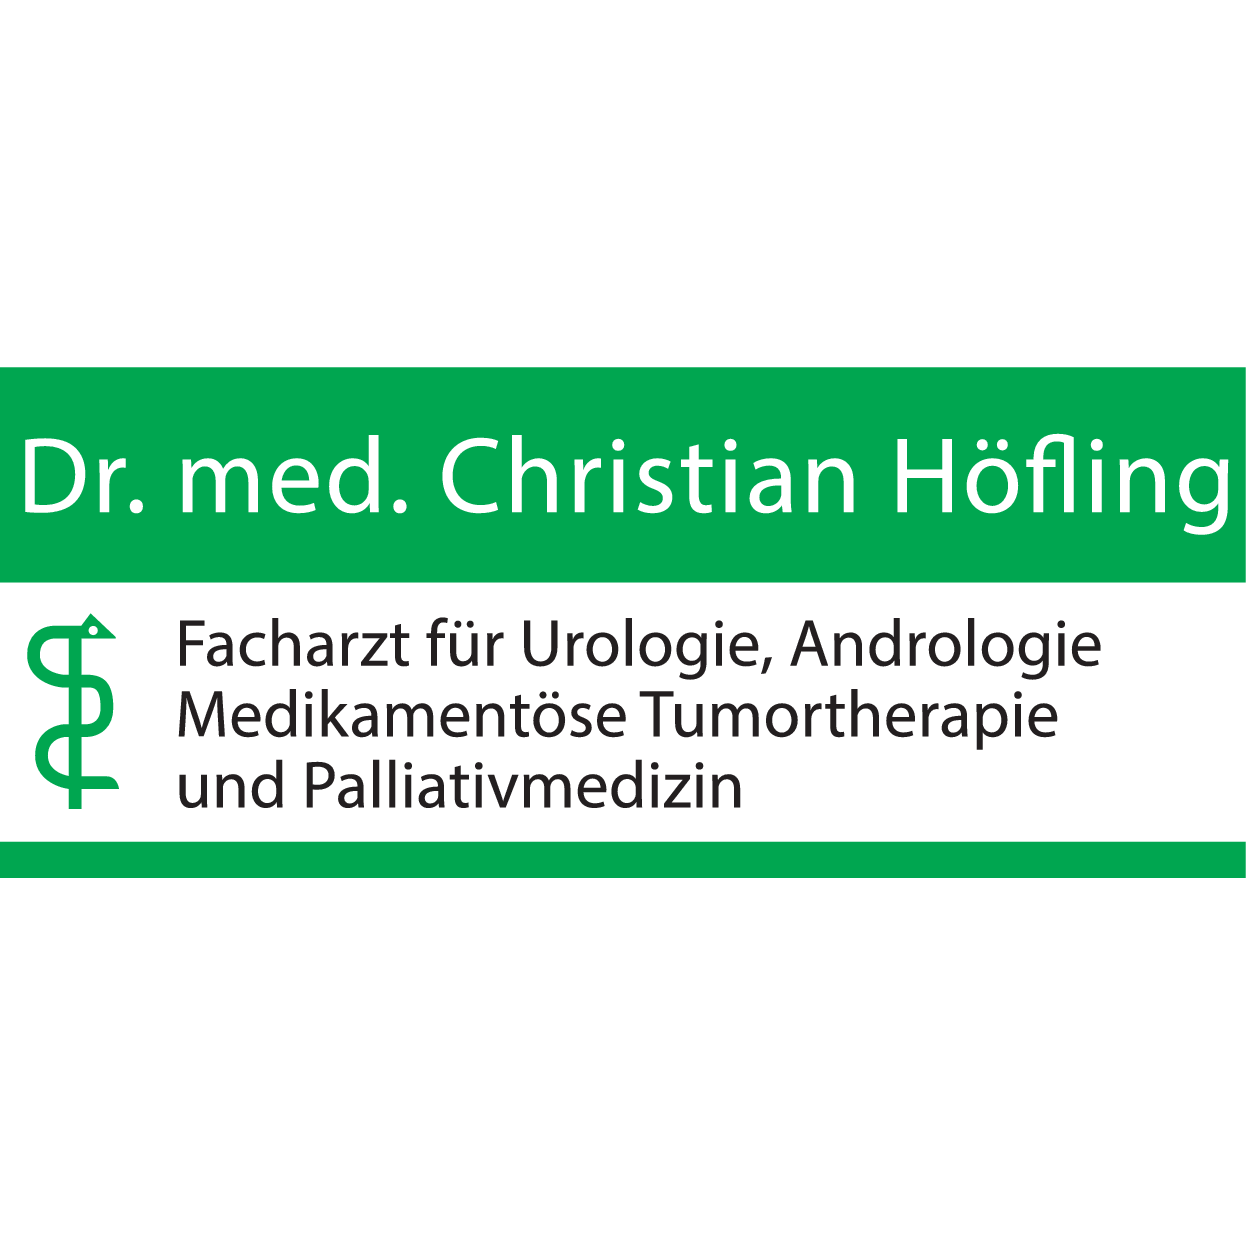 Dr. med. Christian Höfling - Urologist - Chemnitz - 0371 6762752 Germany | ShowMeLocal.com